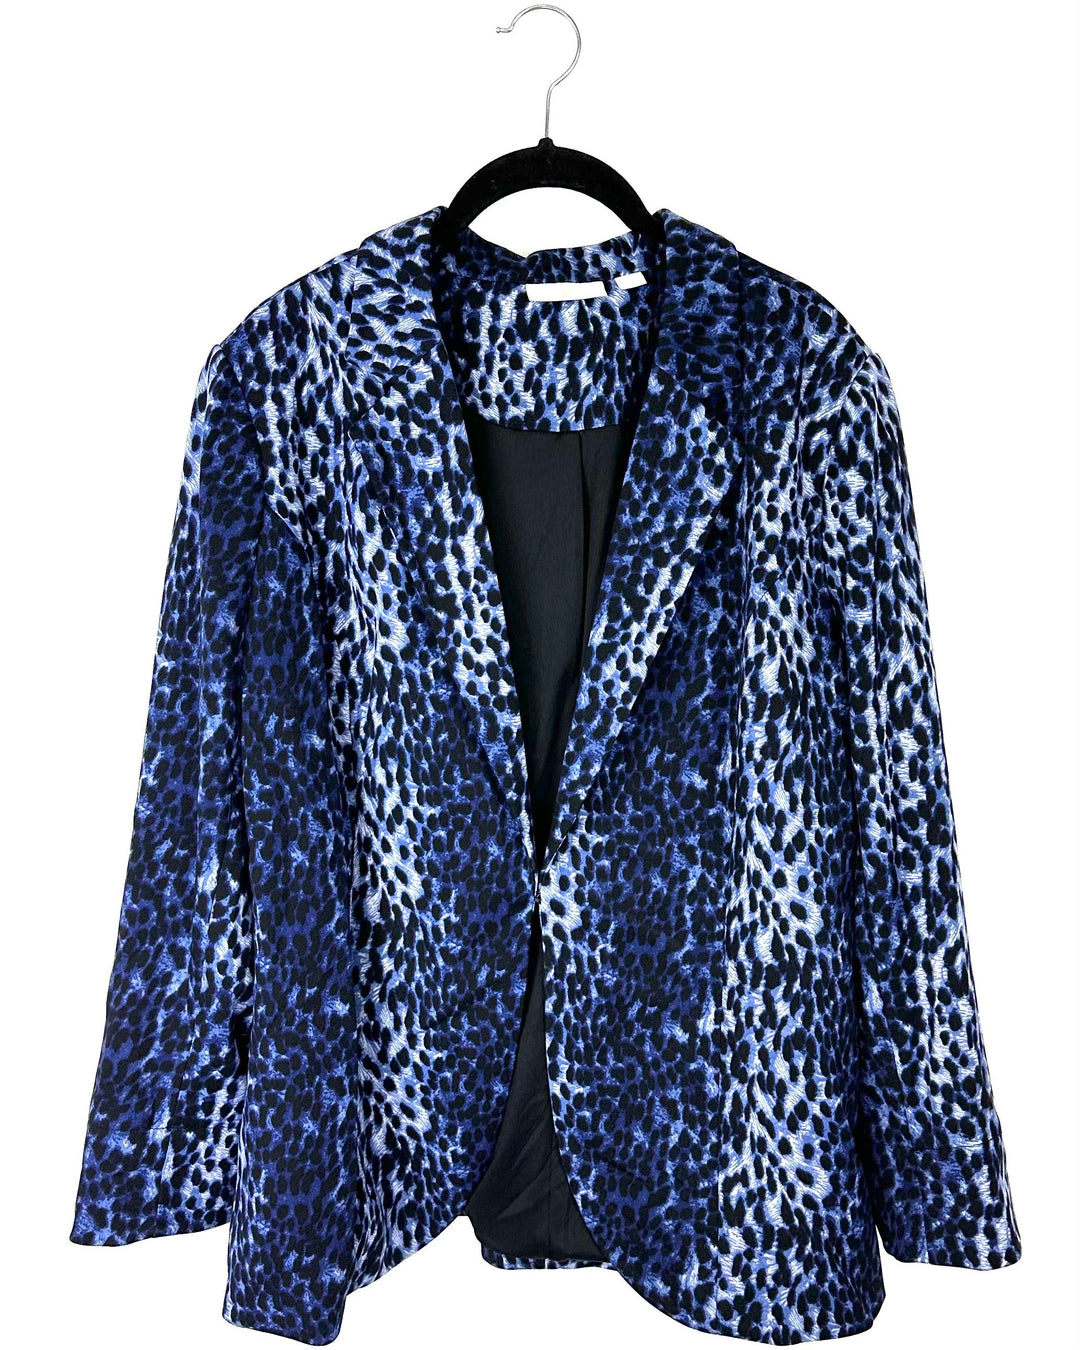 Blue Leopard Print Blazer - Size 14-16